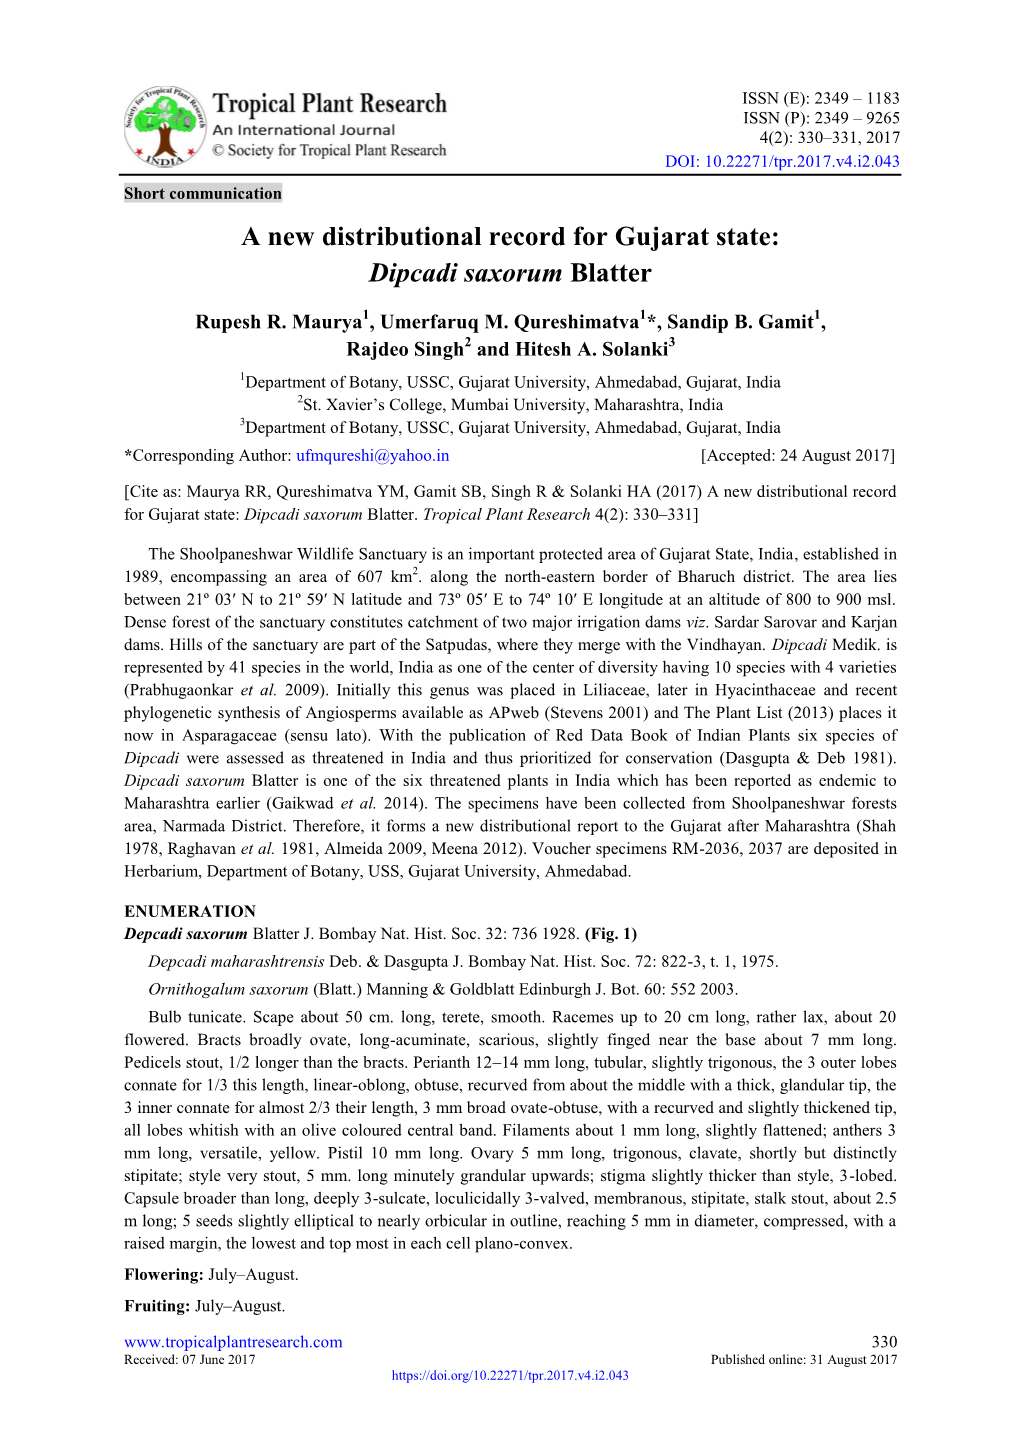 A New Distributional Record for Gujarat State Dipcadi Saxorum Blatter